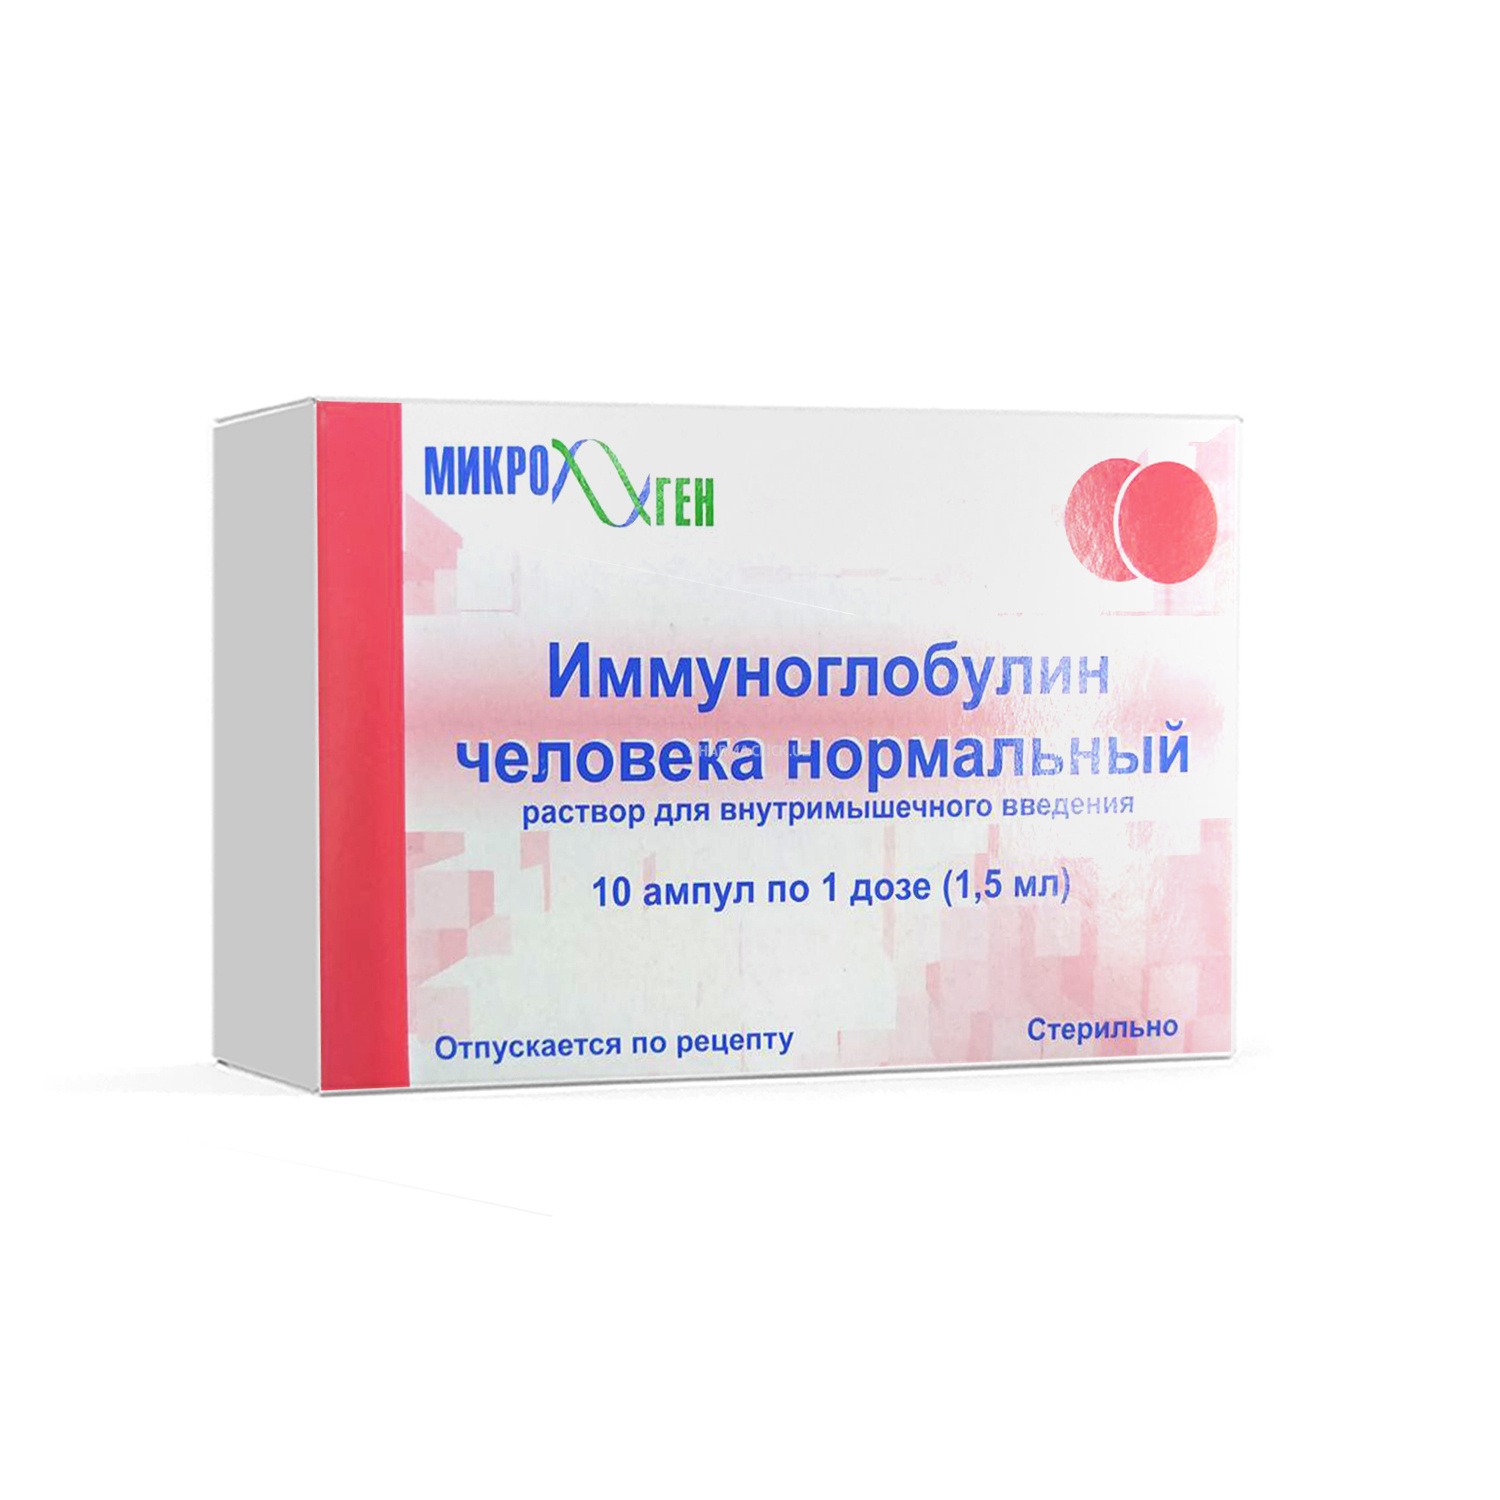 Immunoglobulin cheloveka norm.eritma 1 doza 1,5 ml №10